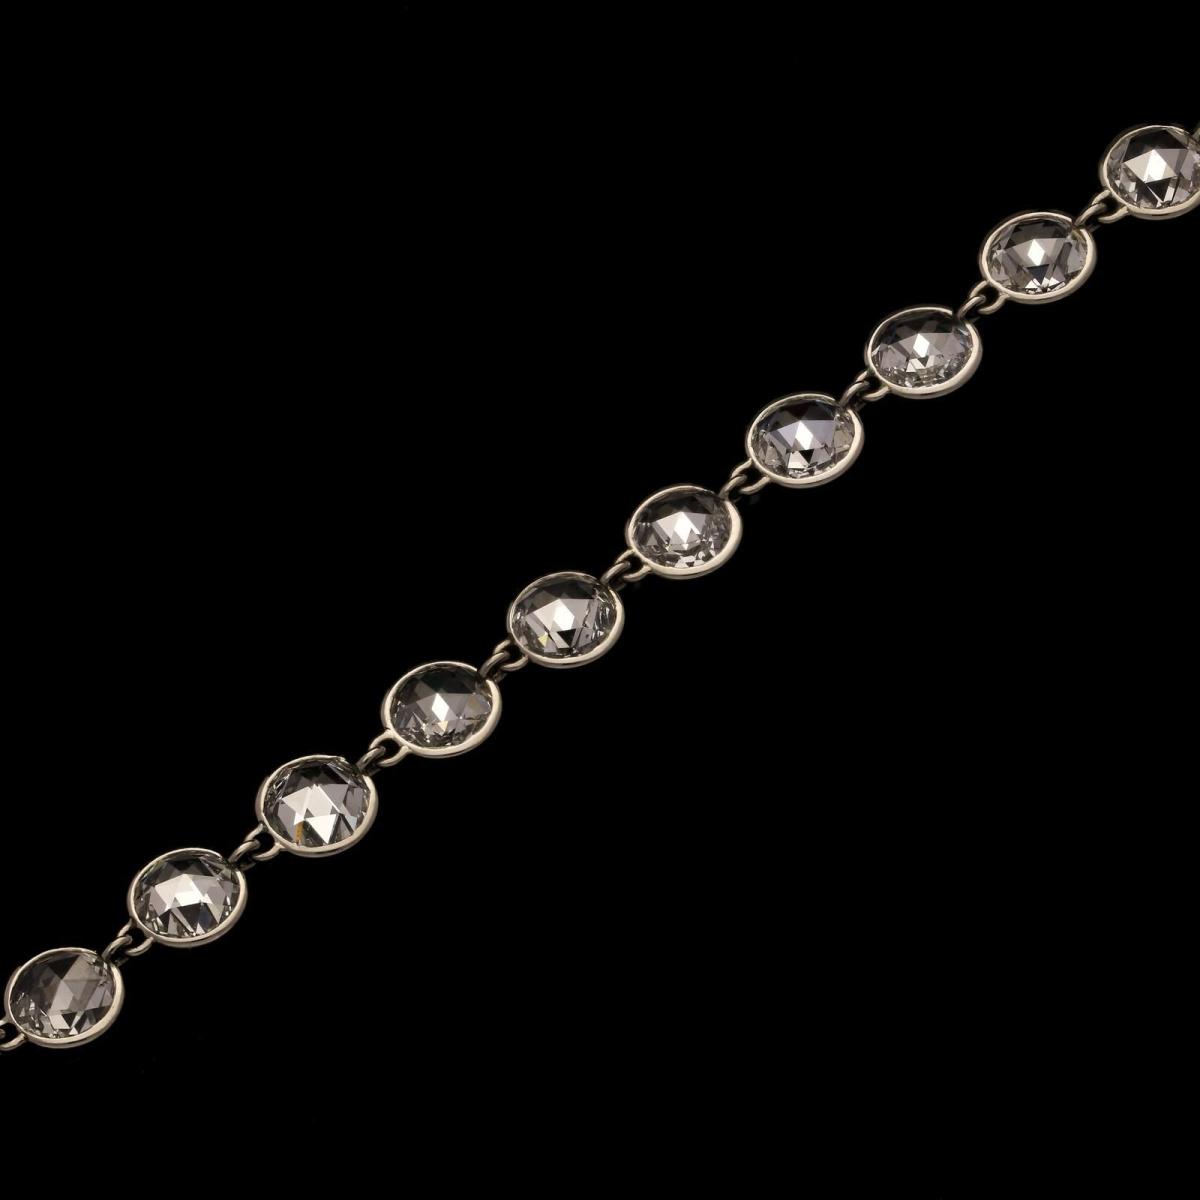 Hancocks 22.40cts Vintage Cut Rose Cut Diamonds in a Platinum Long Necklace